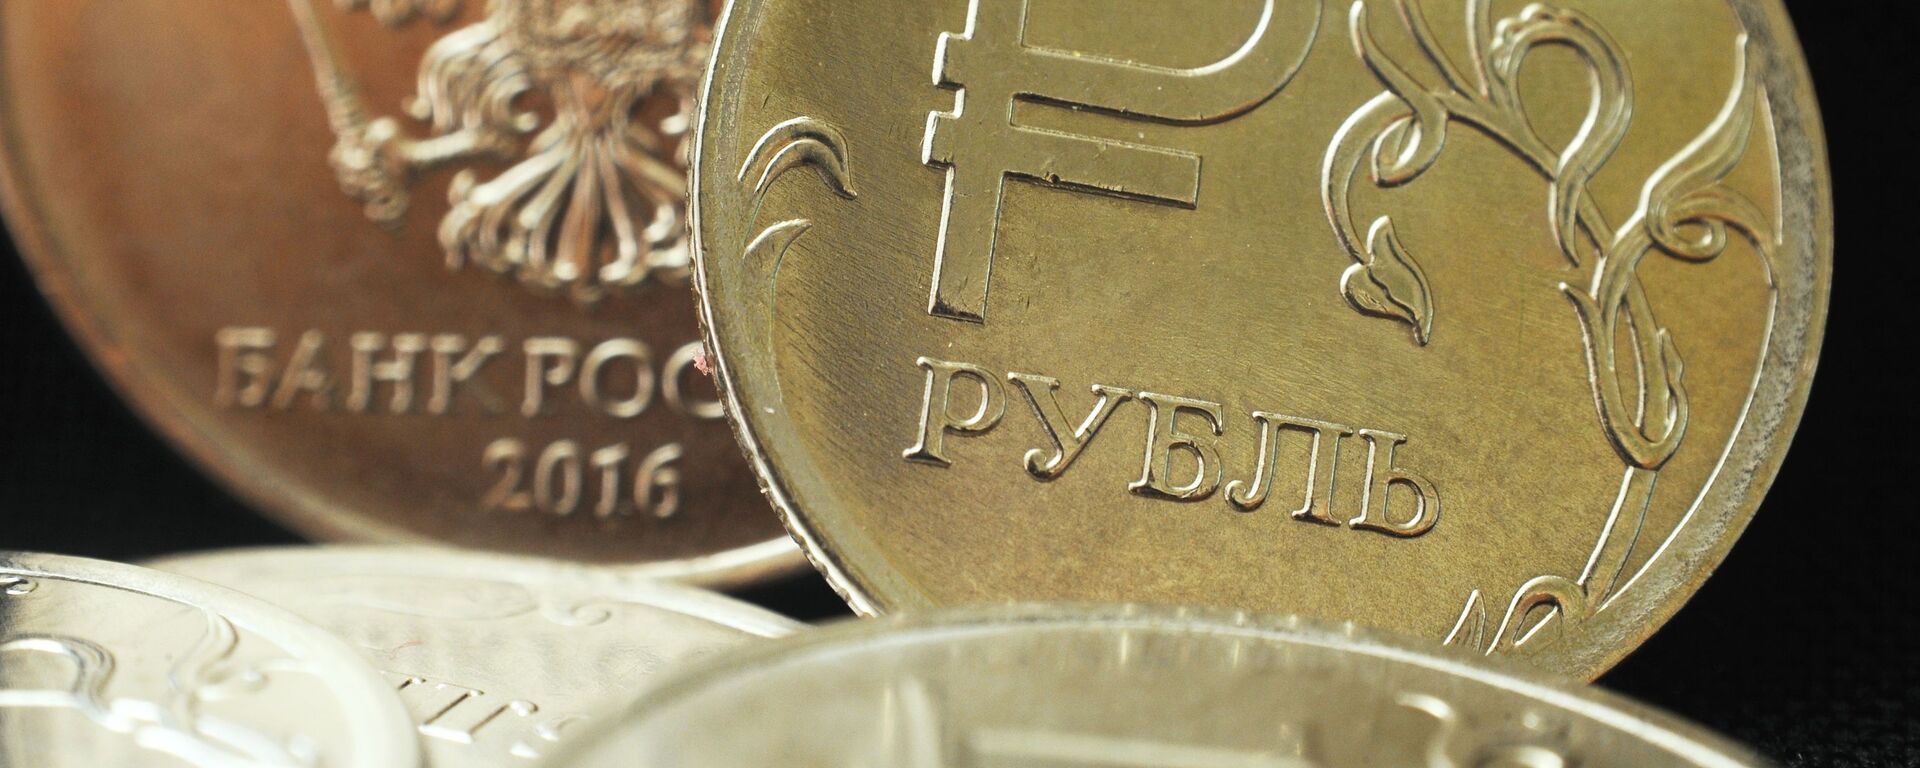 Монета номиналом один рубль с символикой российского рубля, архивное фото - Sputnik Таджикистан, 1920, 23.11.2021